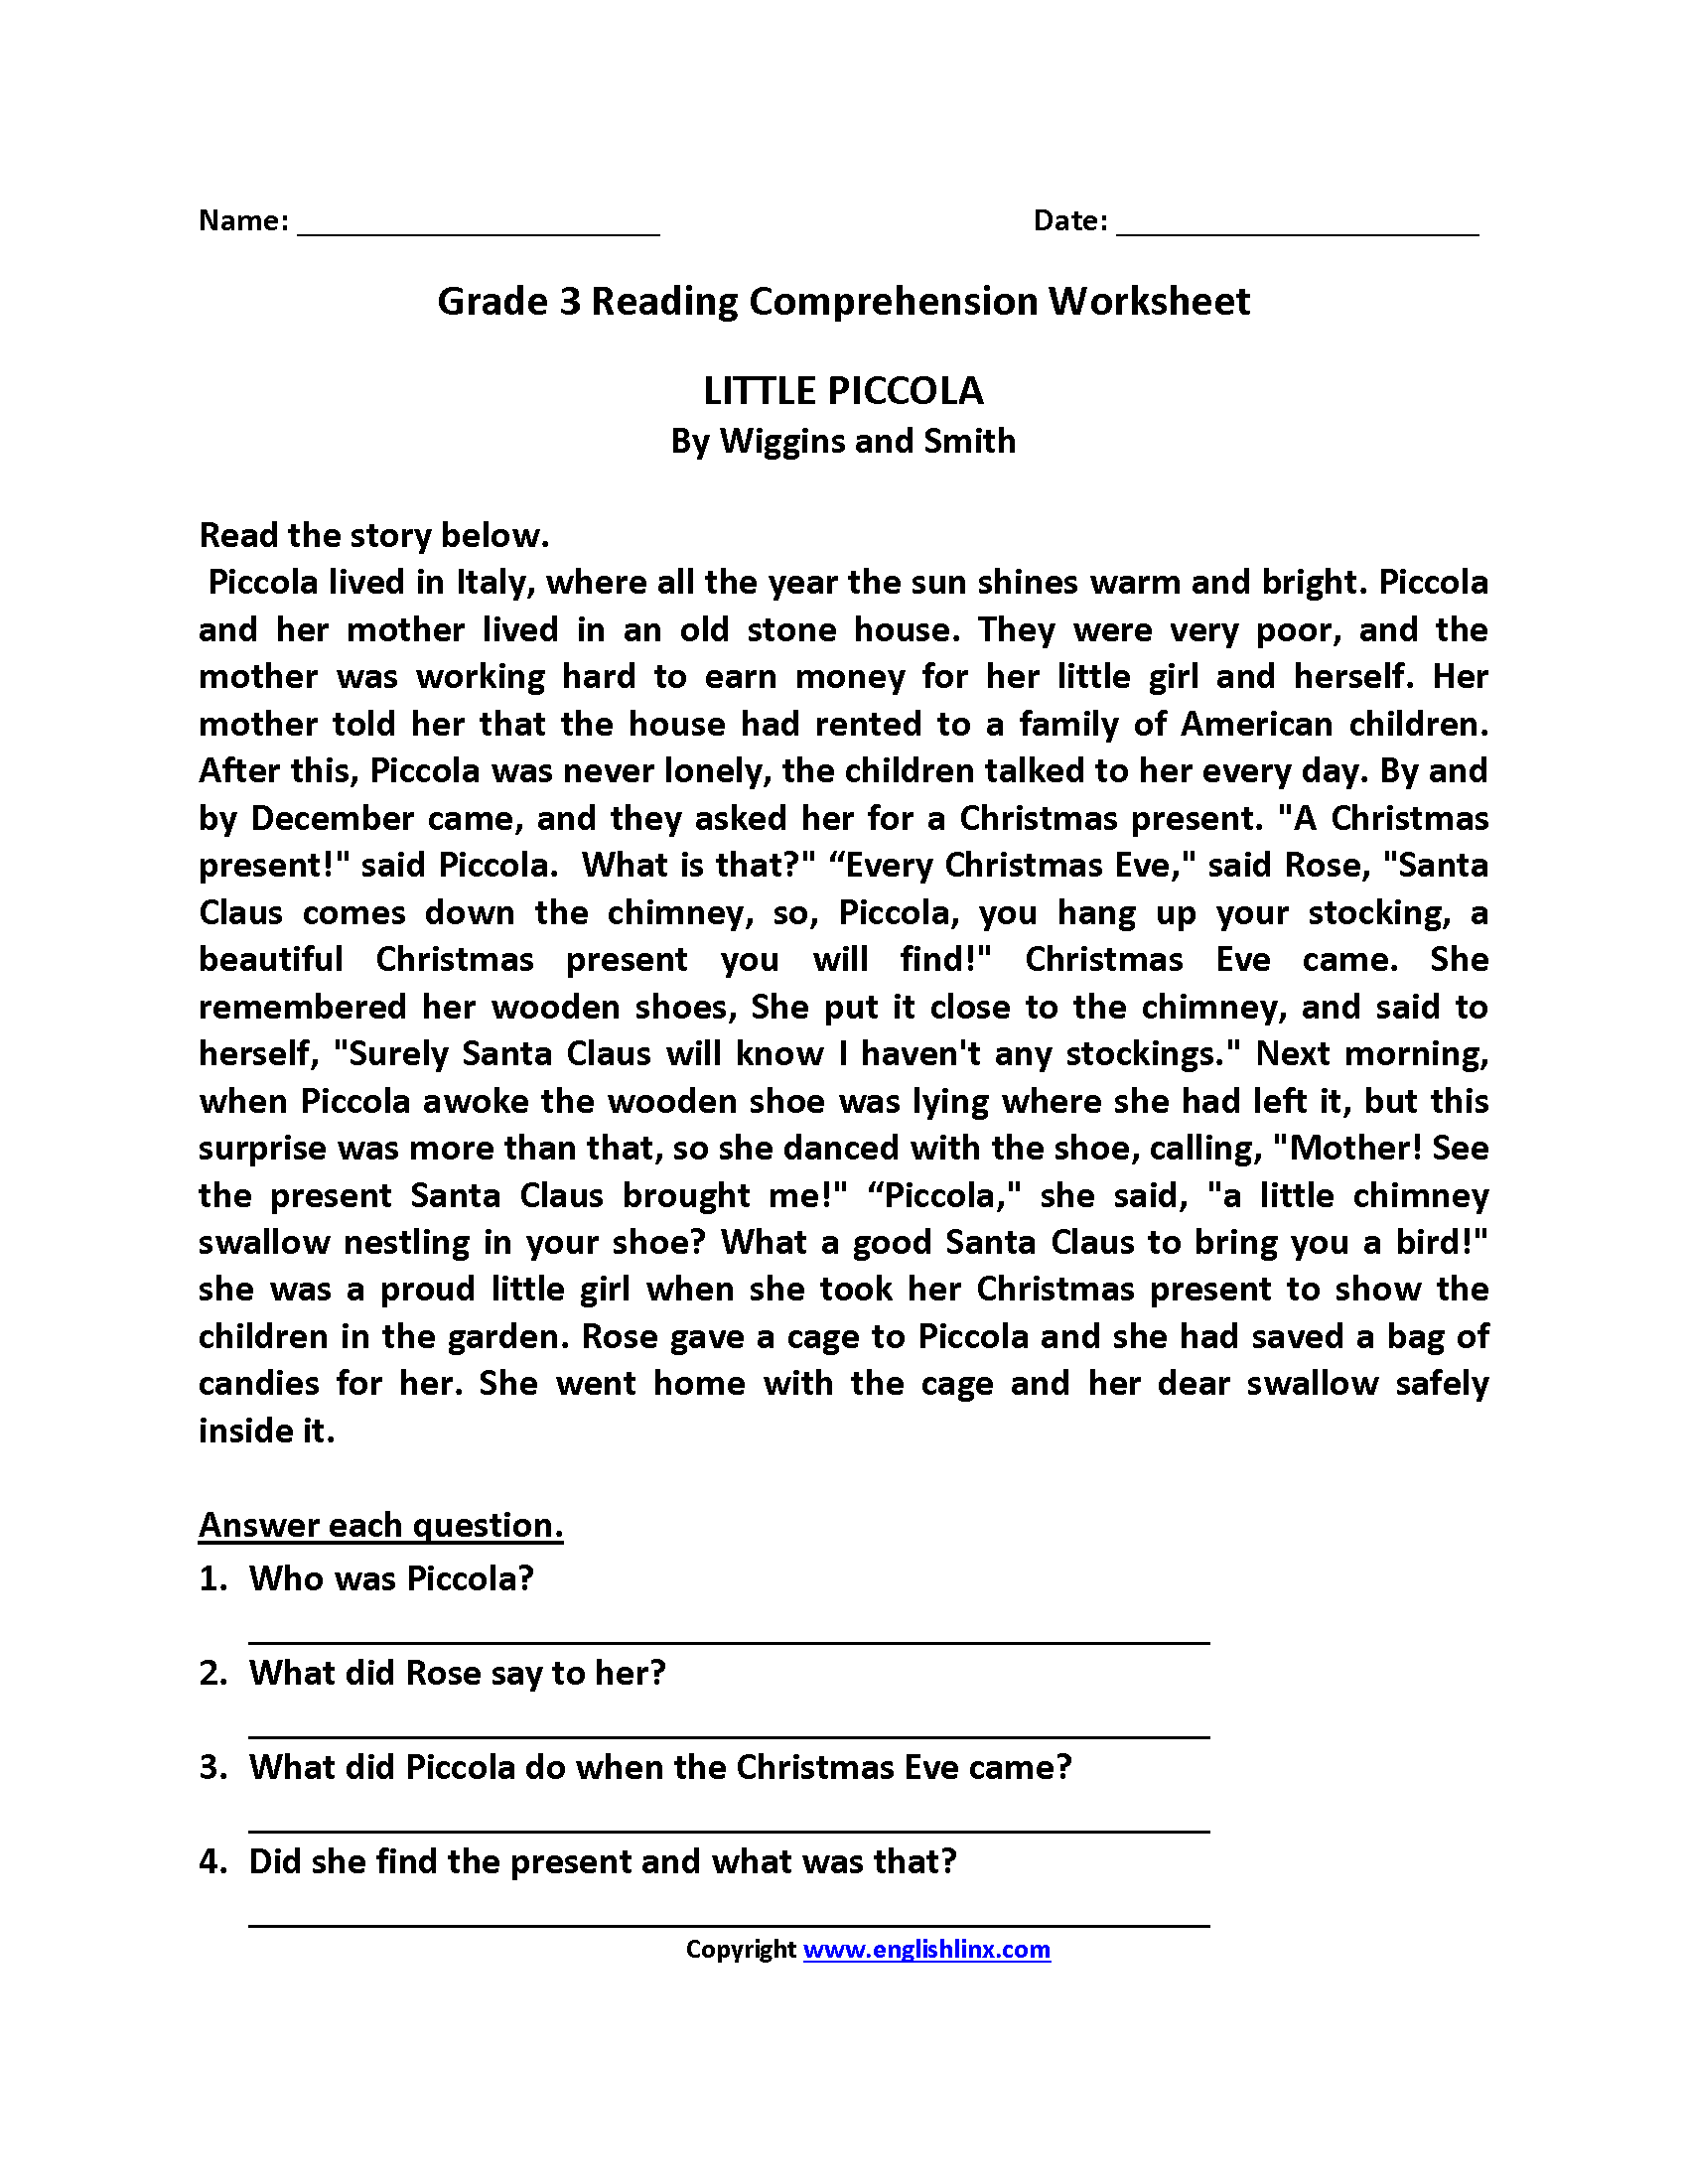 Little Piccola Third Grade Reading Worksheets | Third Grade